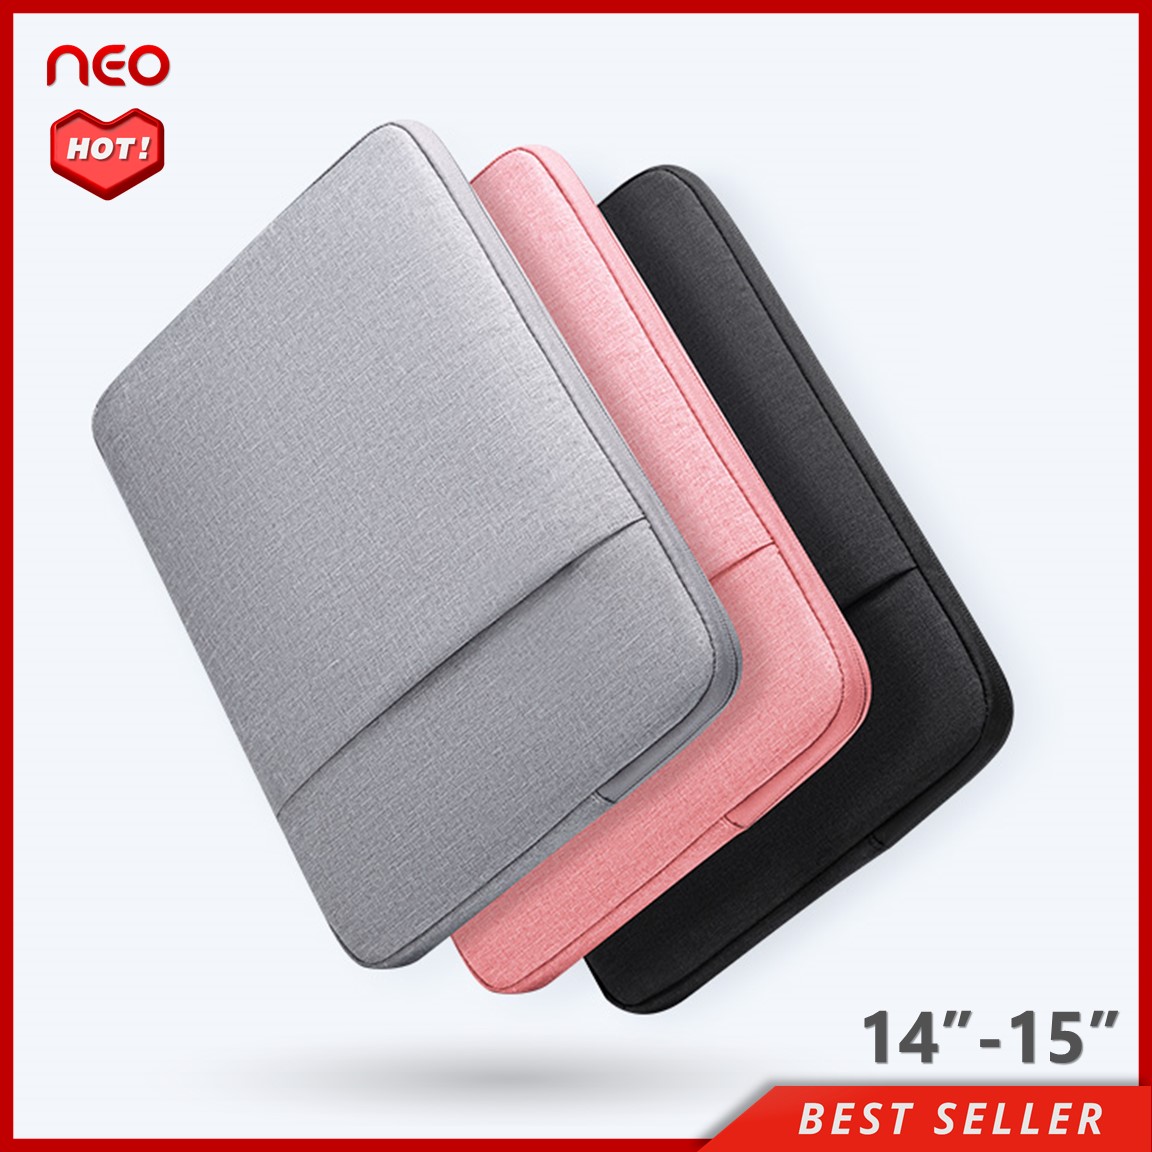 NEO เคสโน๊ตบุ๊ค soft case กระเป๋าโน๊ตบุ๊ค 14นิ้ว เคสMacbook  ซองใส่โน๊ตบุ๊ค ซองแล็ปท็อป กันน้ำ ป้องกันรอยขีดข่วน Laptop Bag Macbook Case 14 inch